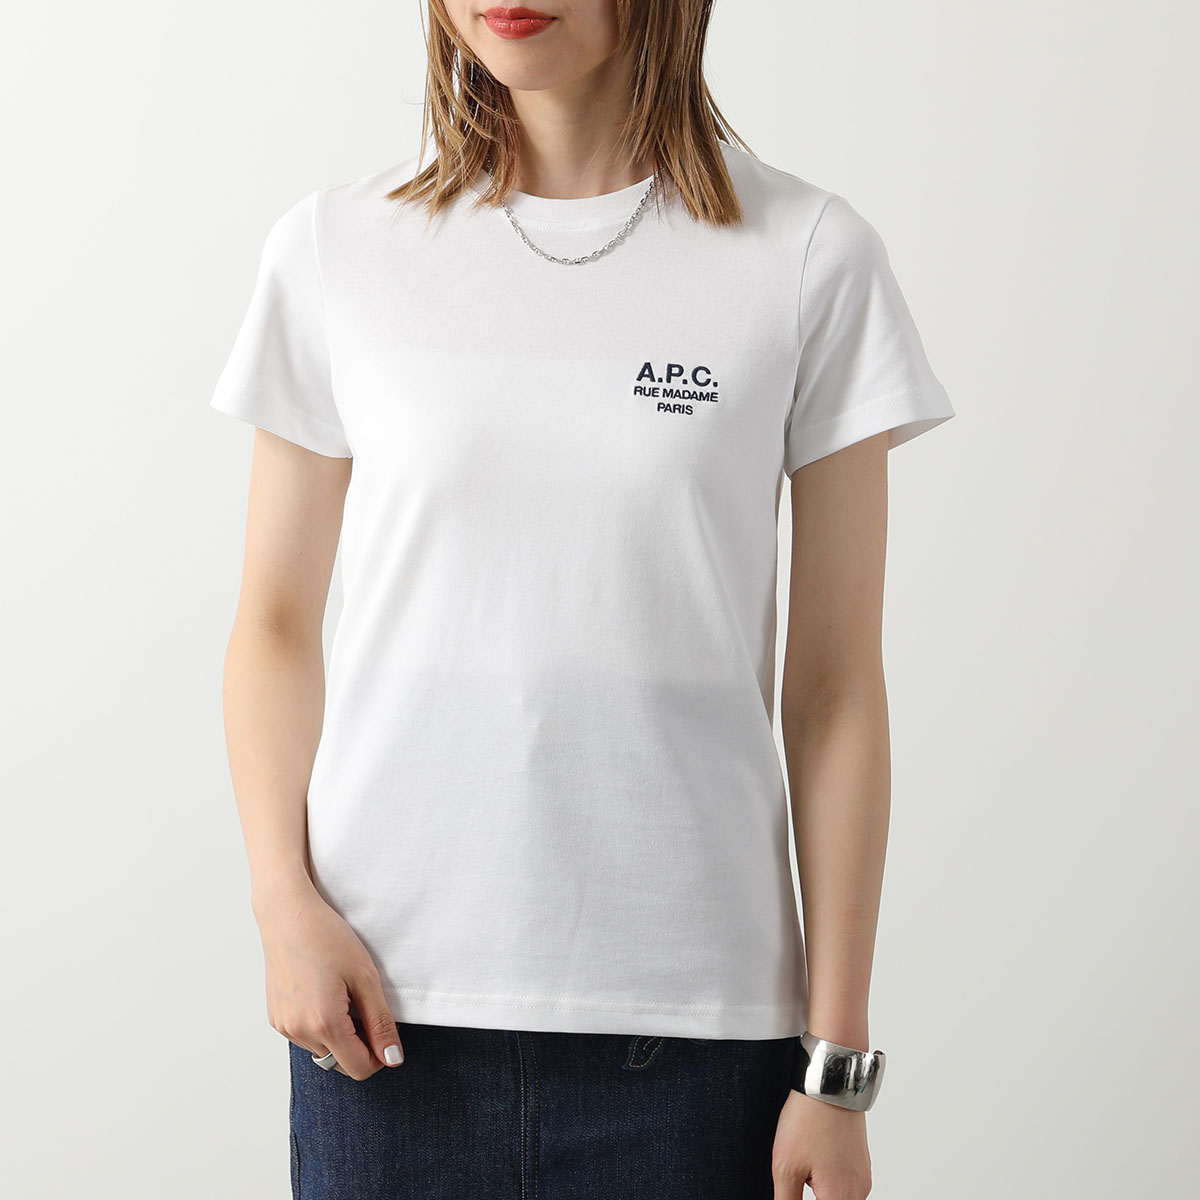 A.P.C Tシャツの商品一覧 通販 - Yahoo!ショッピング